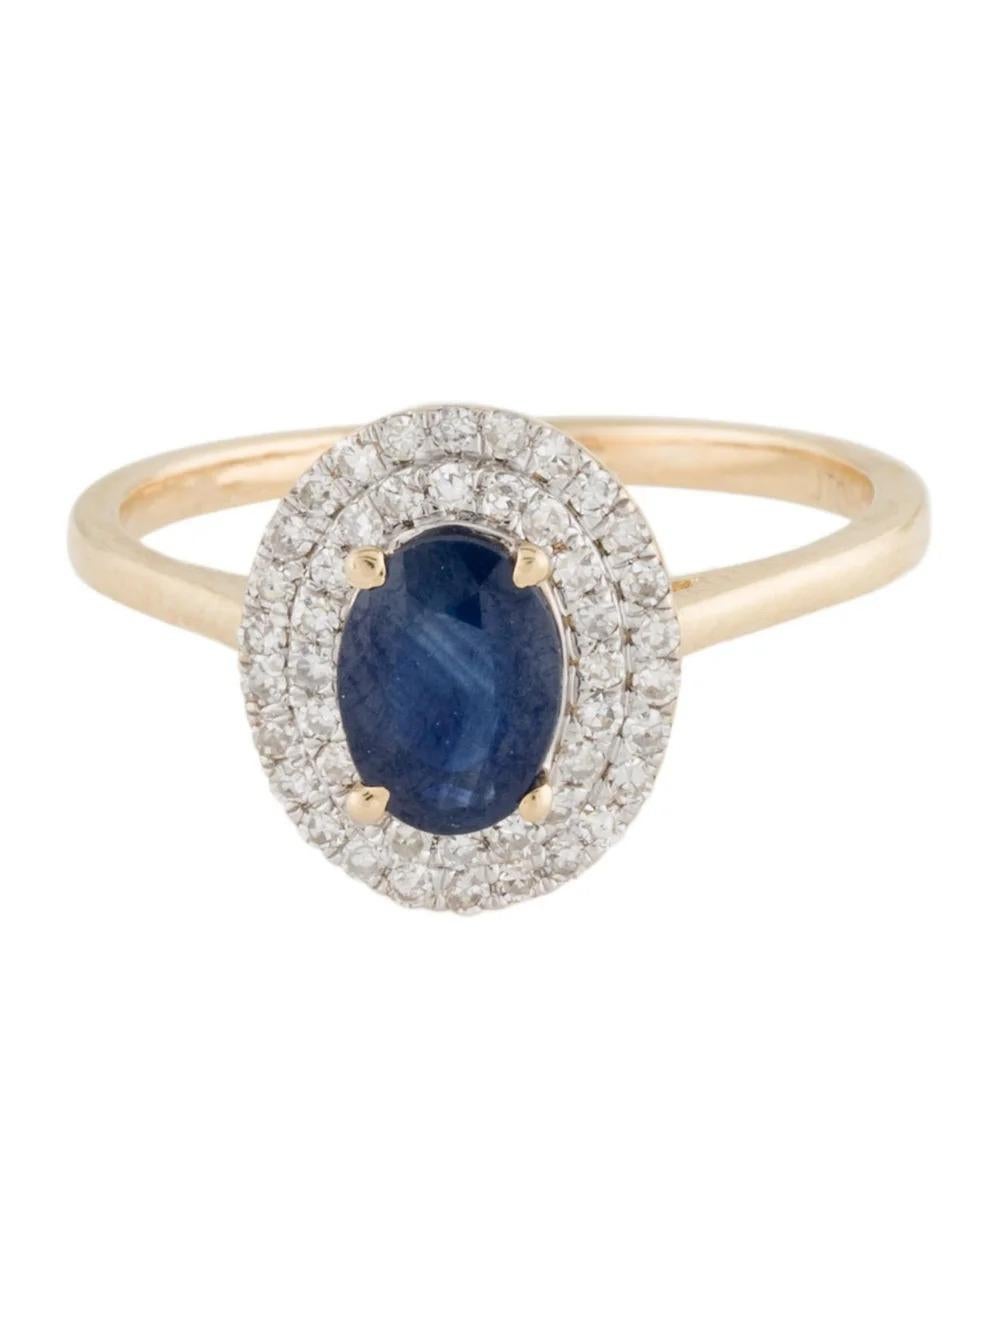 Oval Cut 14K Sapphire & Diamond Cocktail Ring, Size 6.25 - Elegant Statement Jewelry